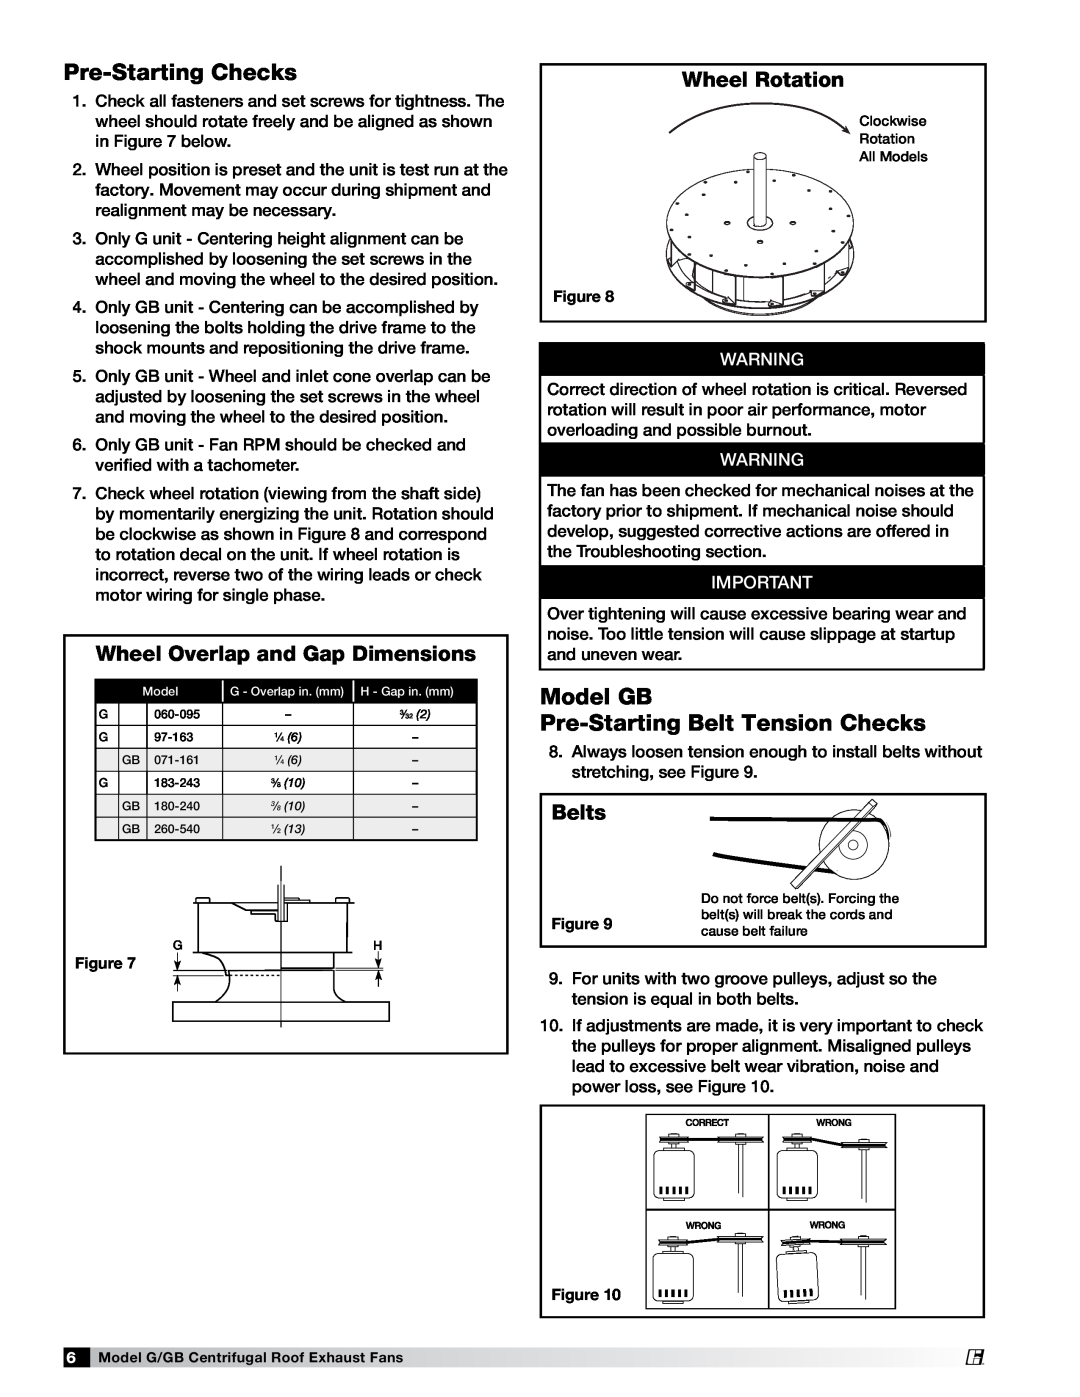 Acer 471558 manual Pre-Starting Checks, Model GB Pre-Starting Belt Tension Checks, Wheel Overlap and Gap Dimensions, Belts 